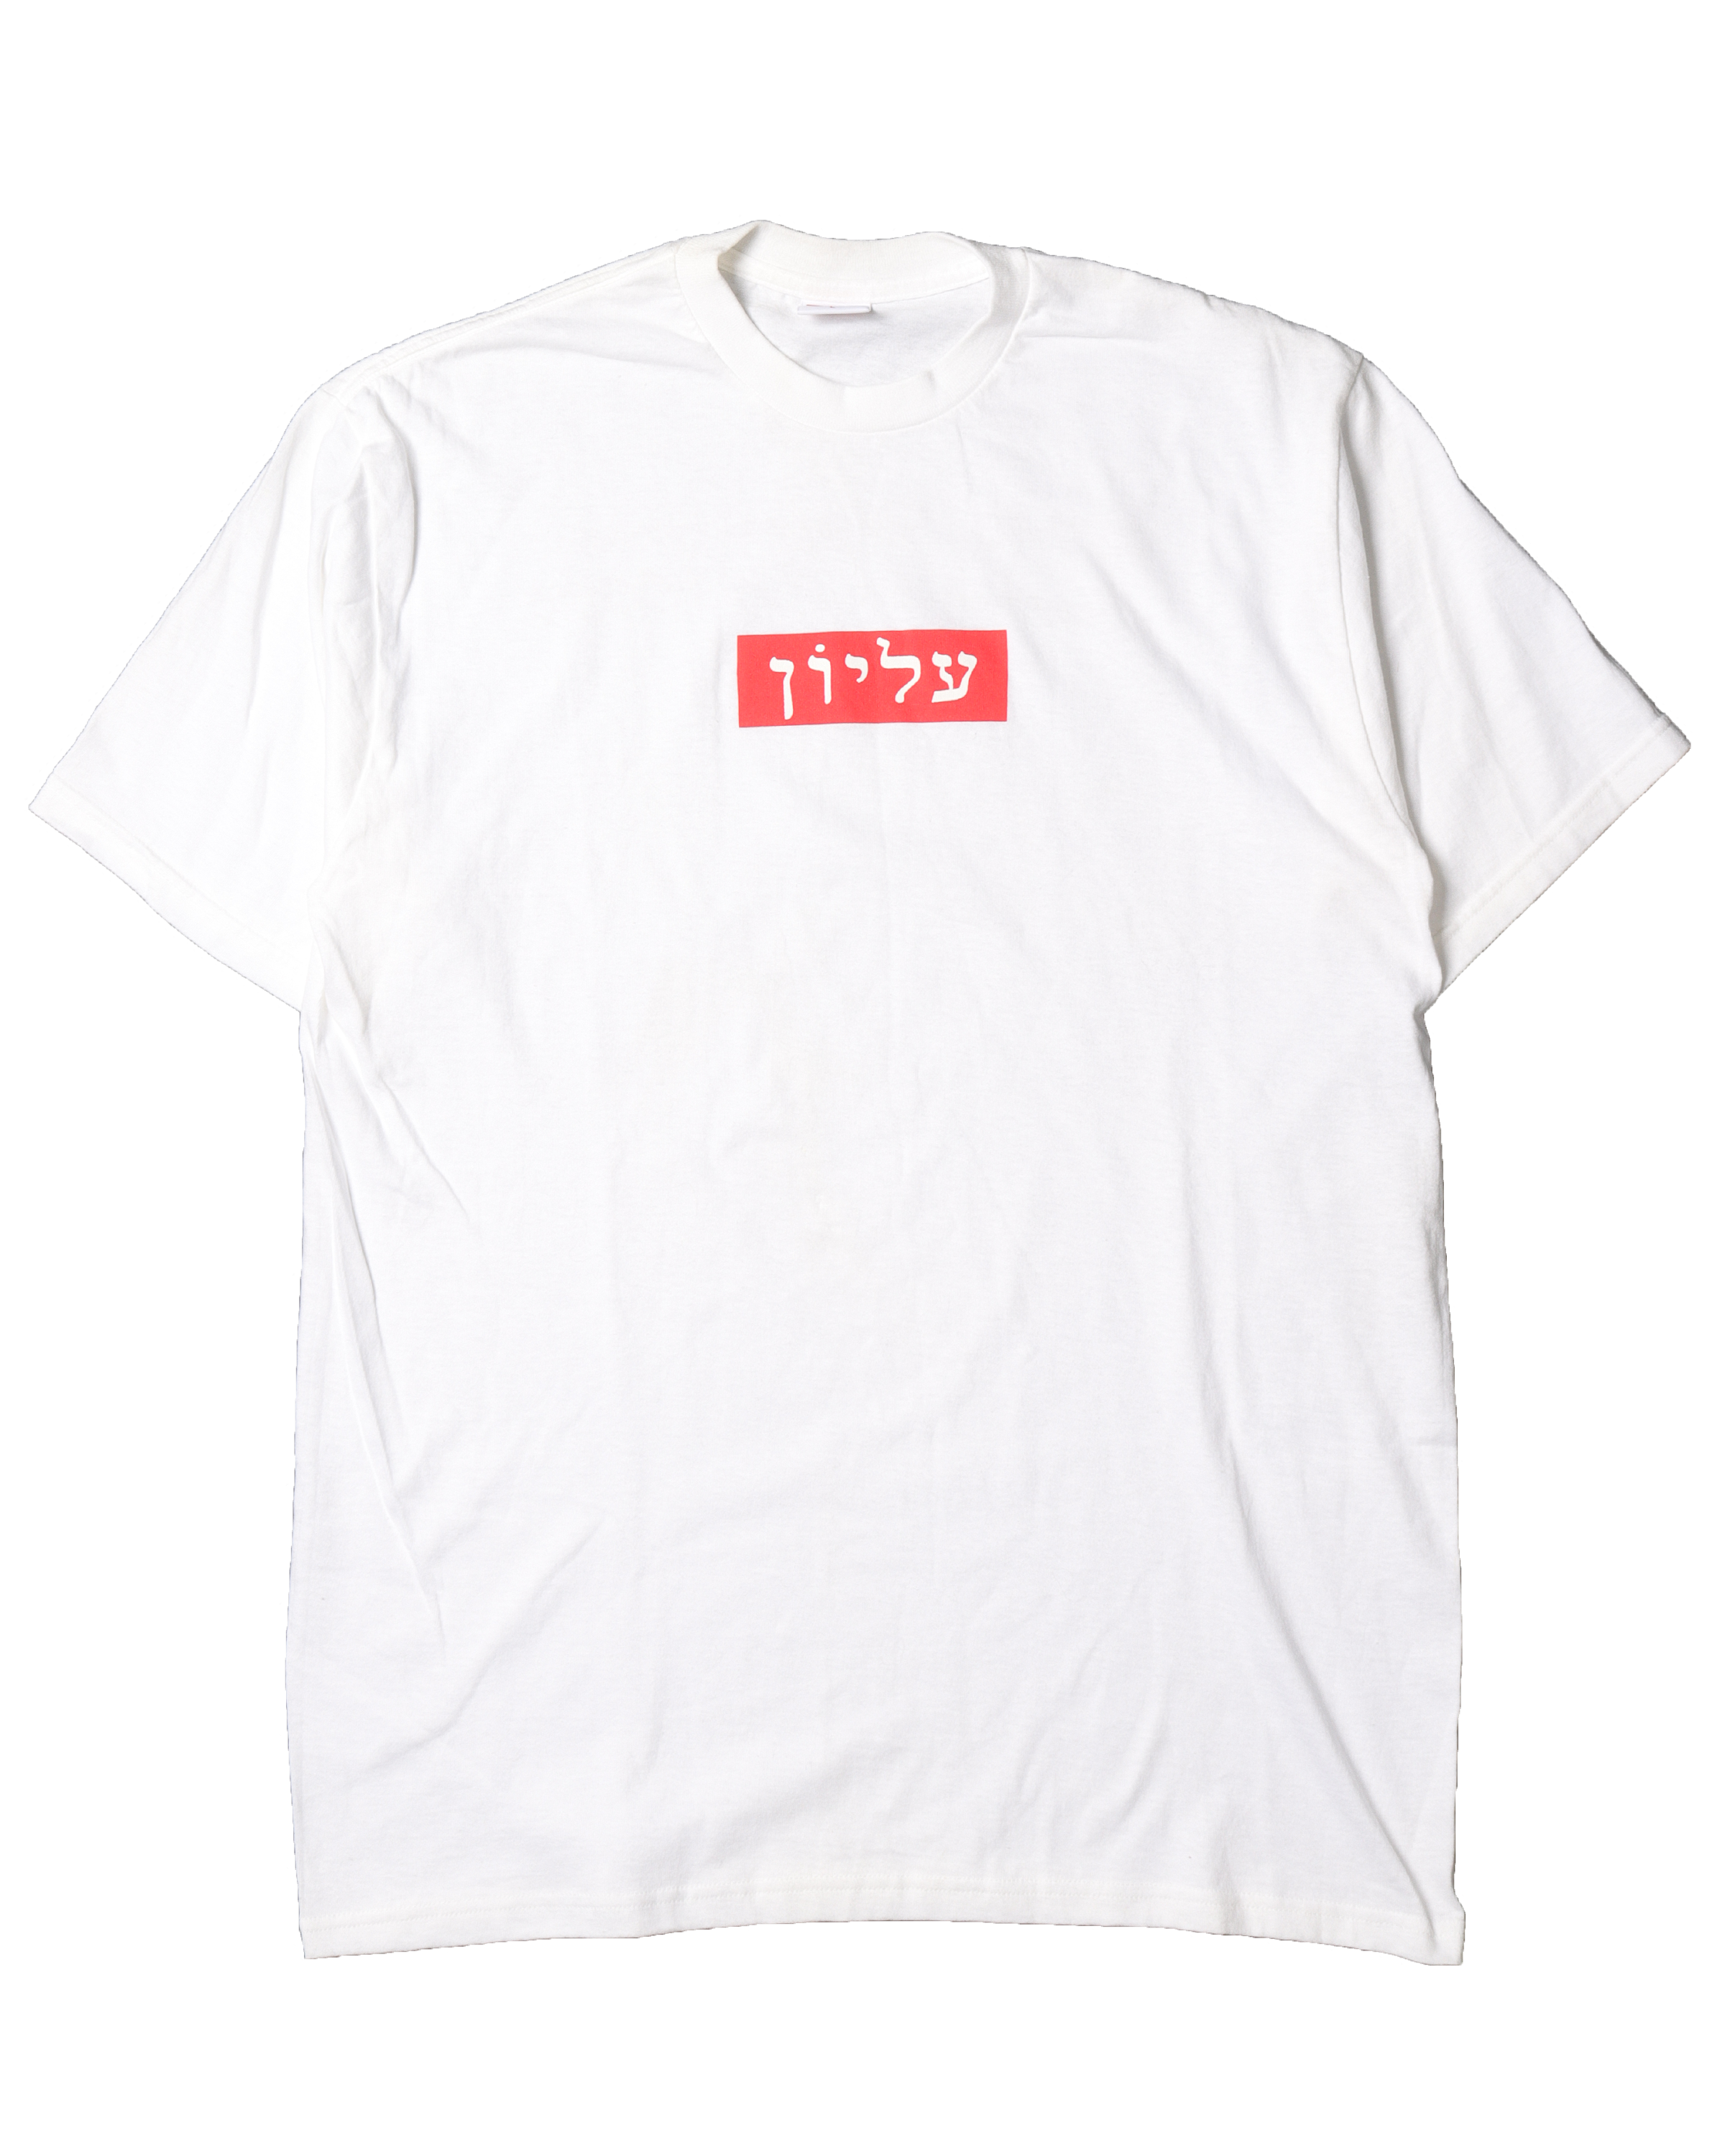 T-shirt Hoodie Supreme Clothing Top, Supreme, Supreme boxed logo, text,  rectangle, fashion png